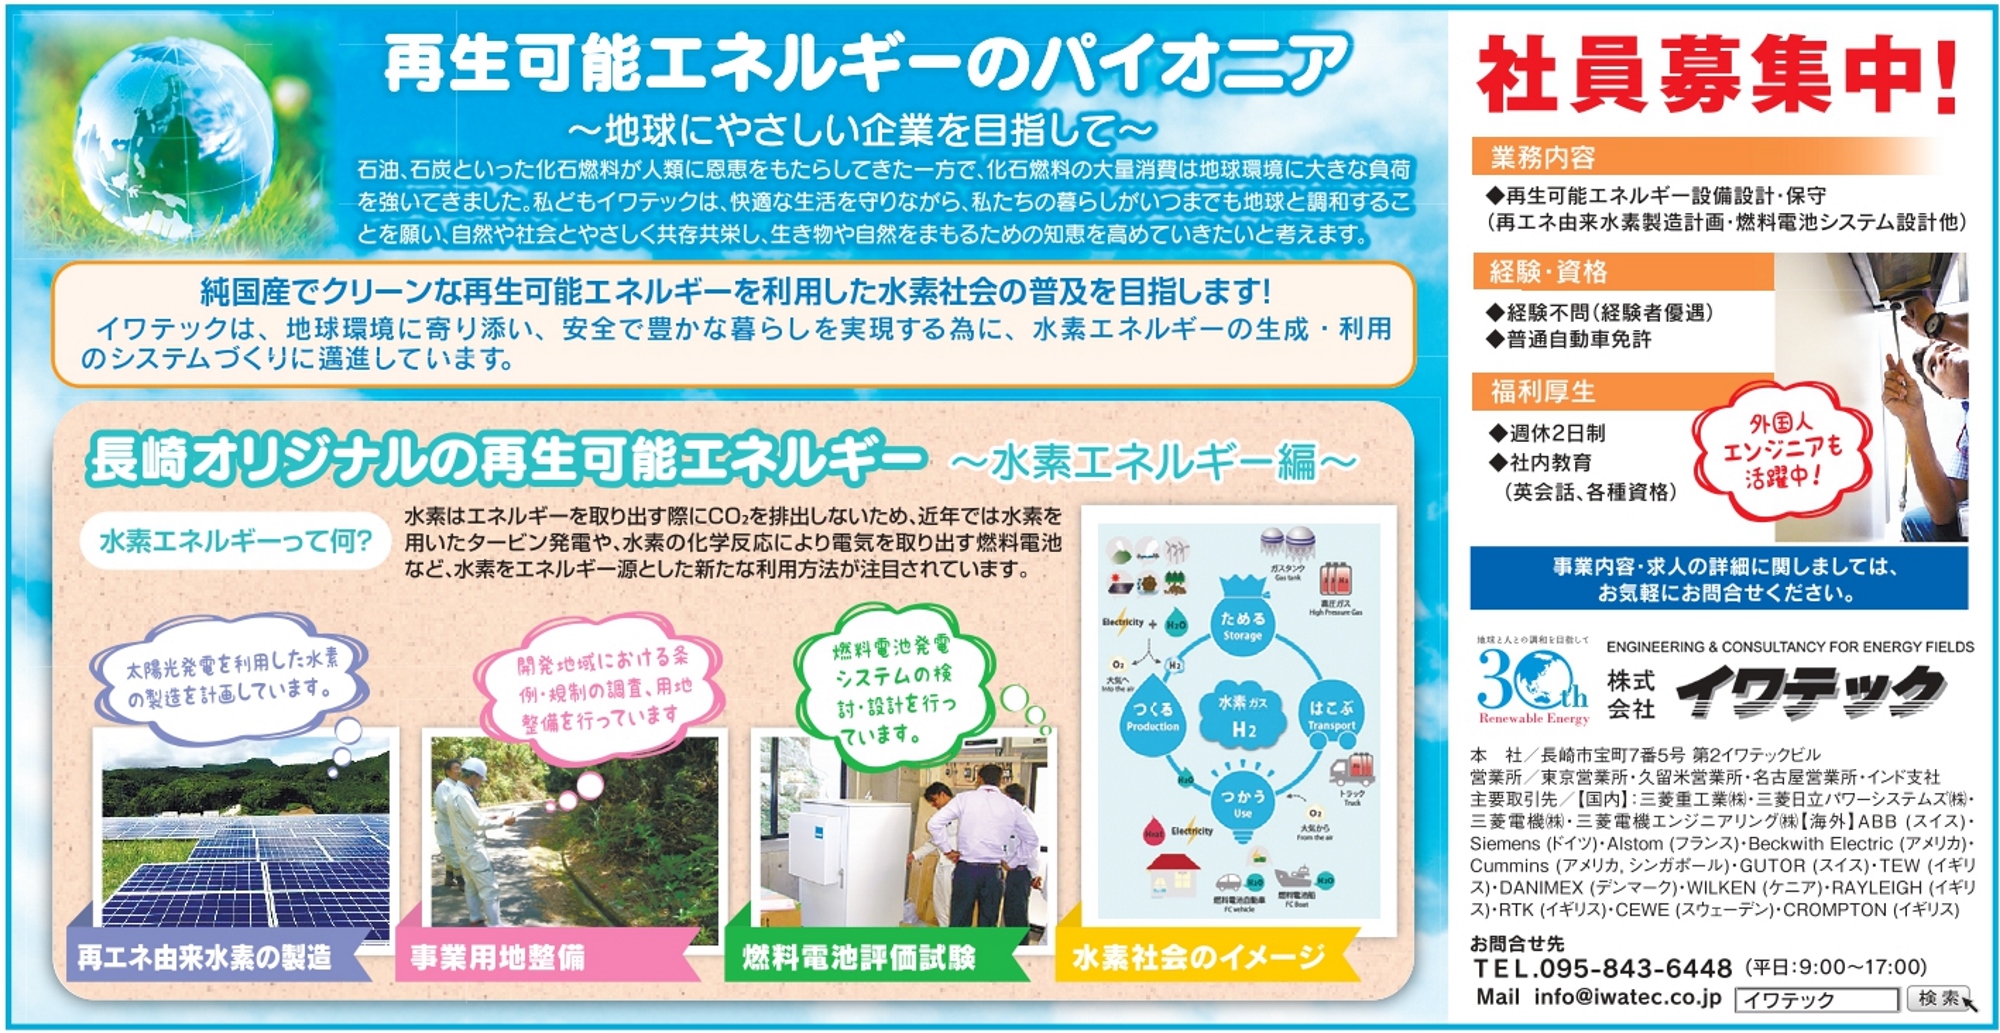 第５弾 長崎新聞のNR（Nagasaki Reader）1月号広告掲載！